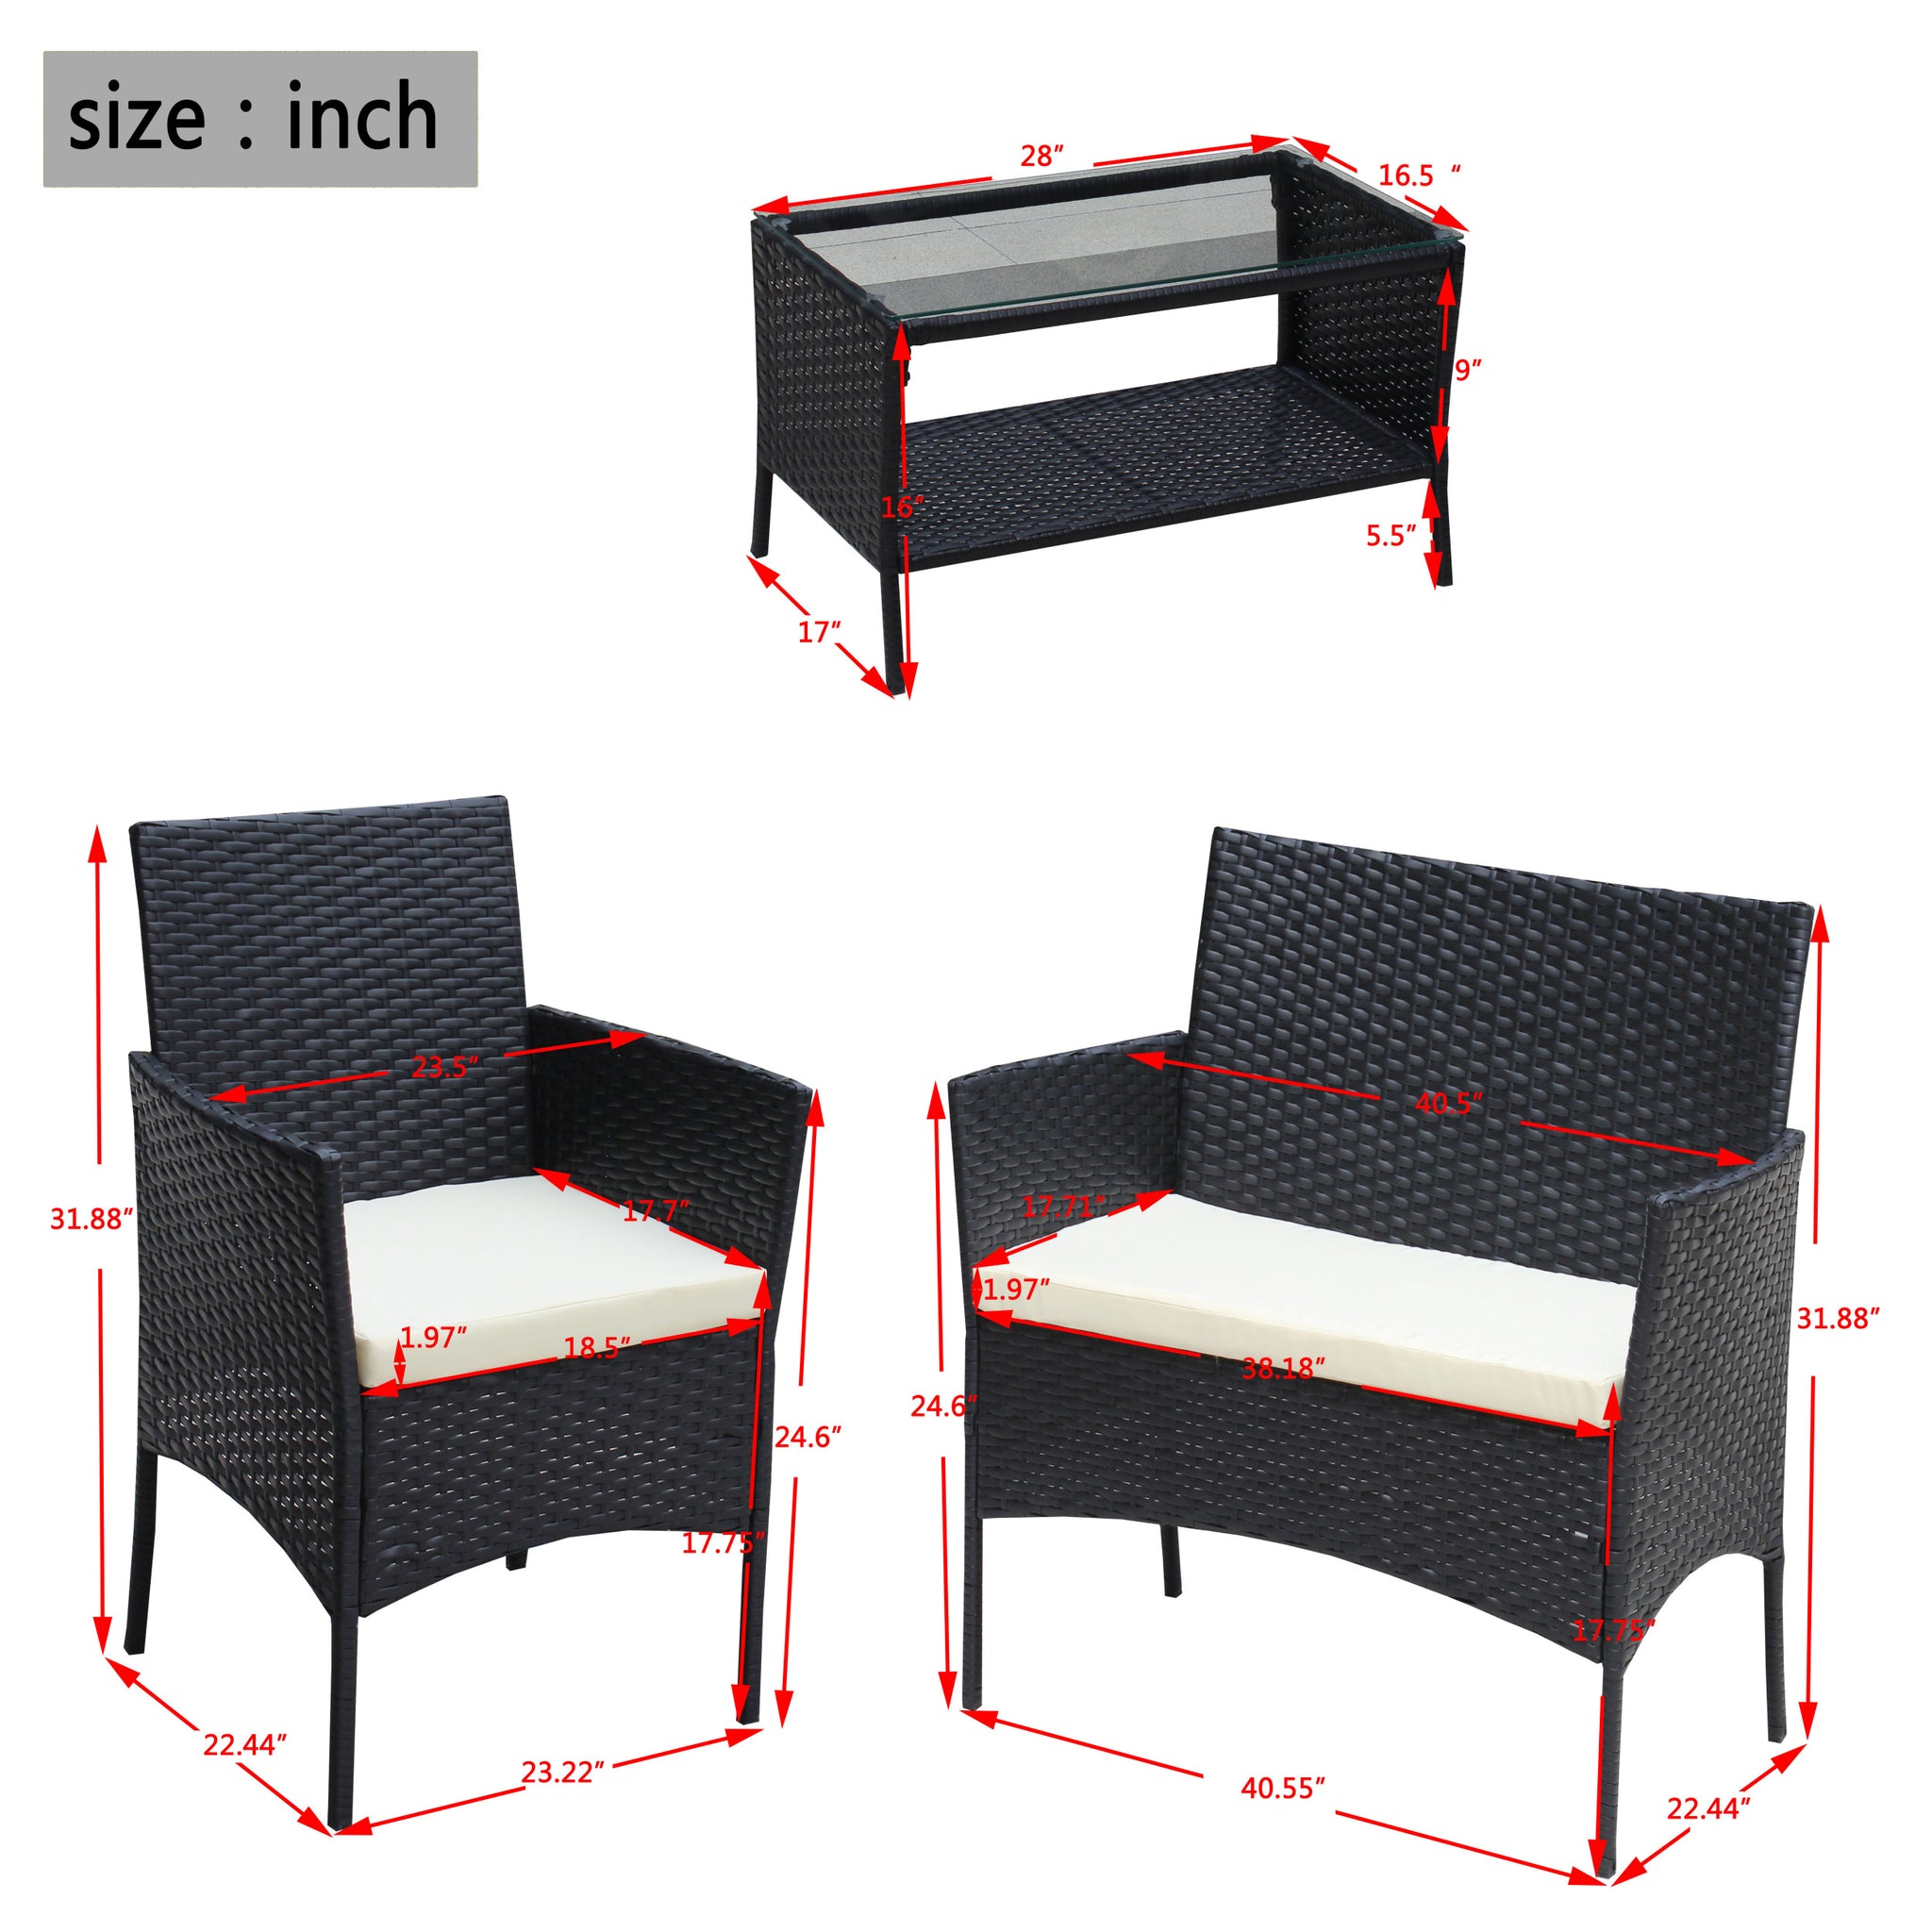 4 PC Rattan Patio Furniture Set Outdoor Patio black-iron